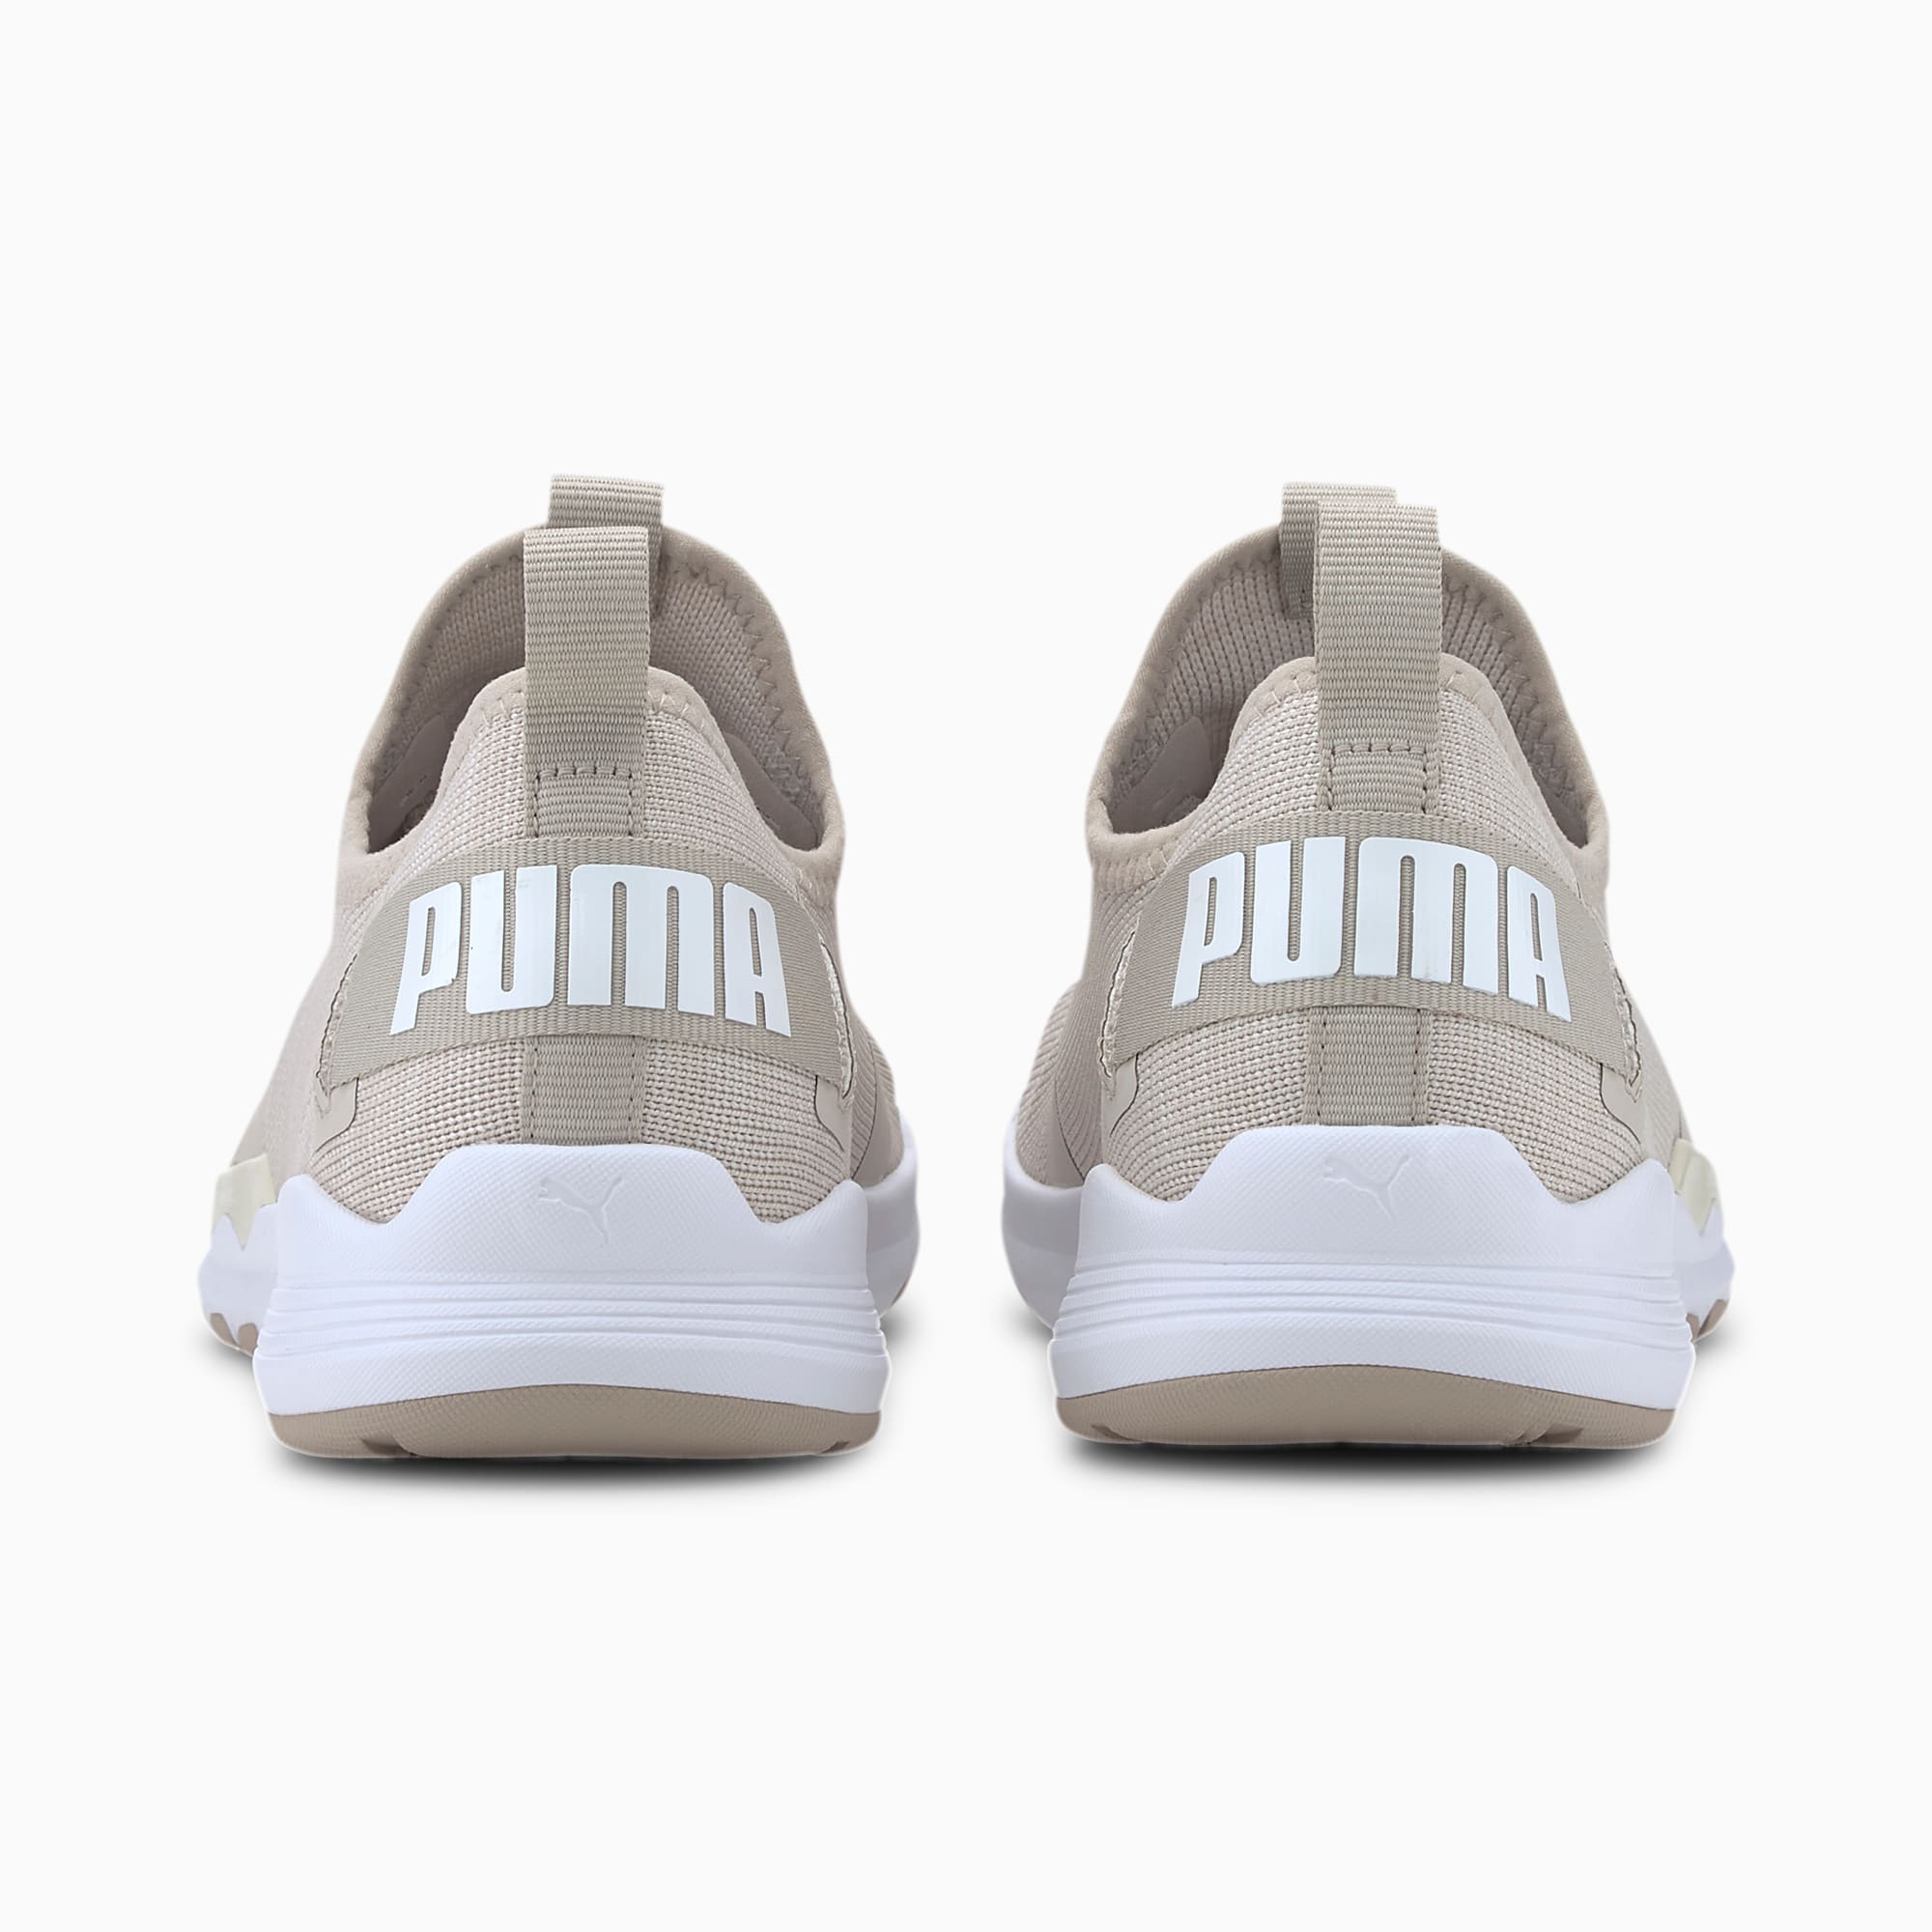 puma ignite knit shoes